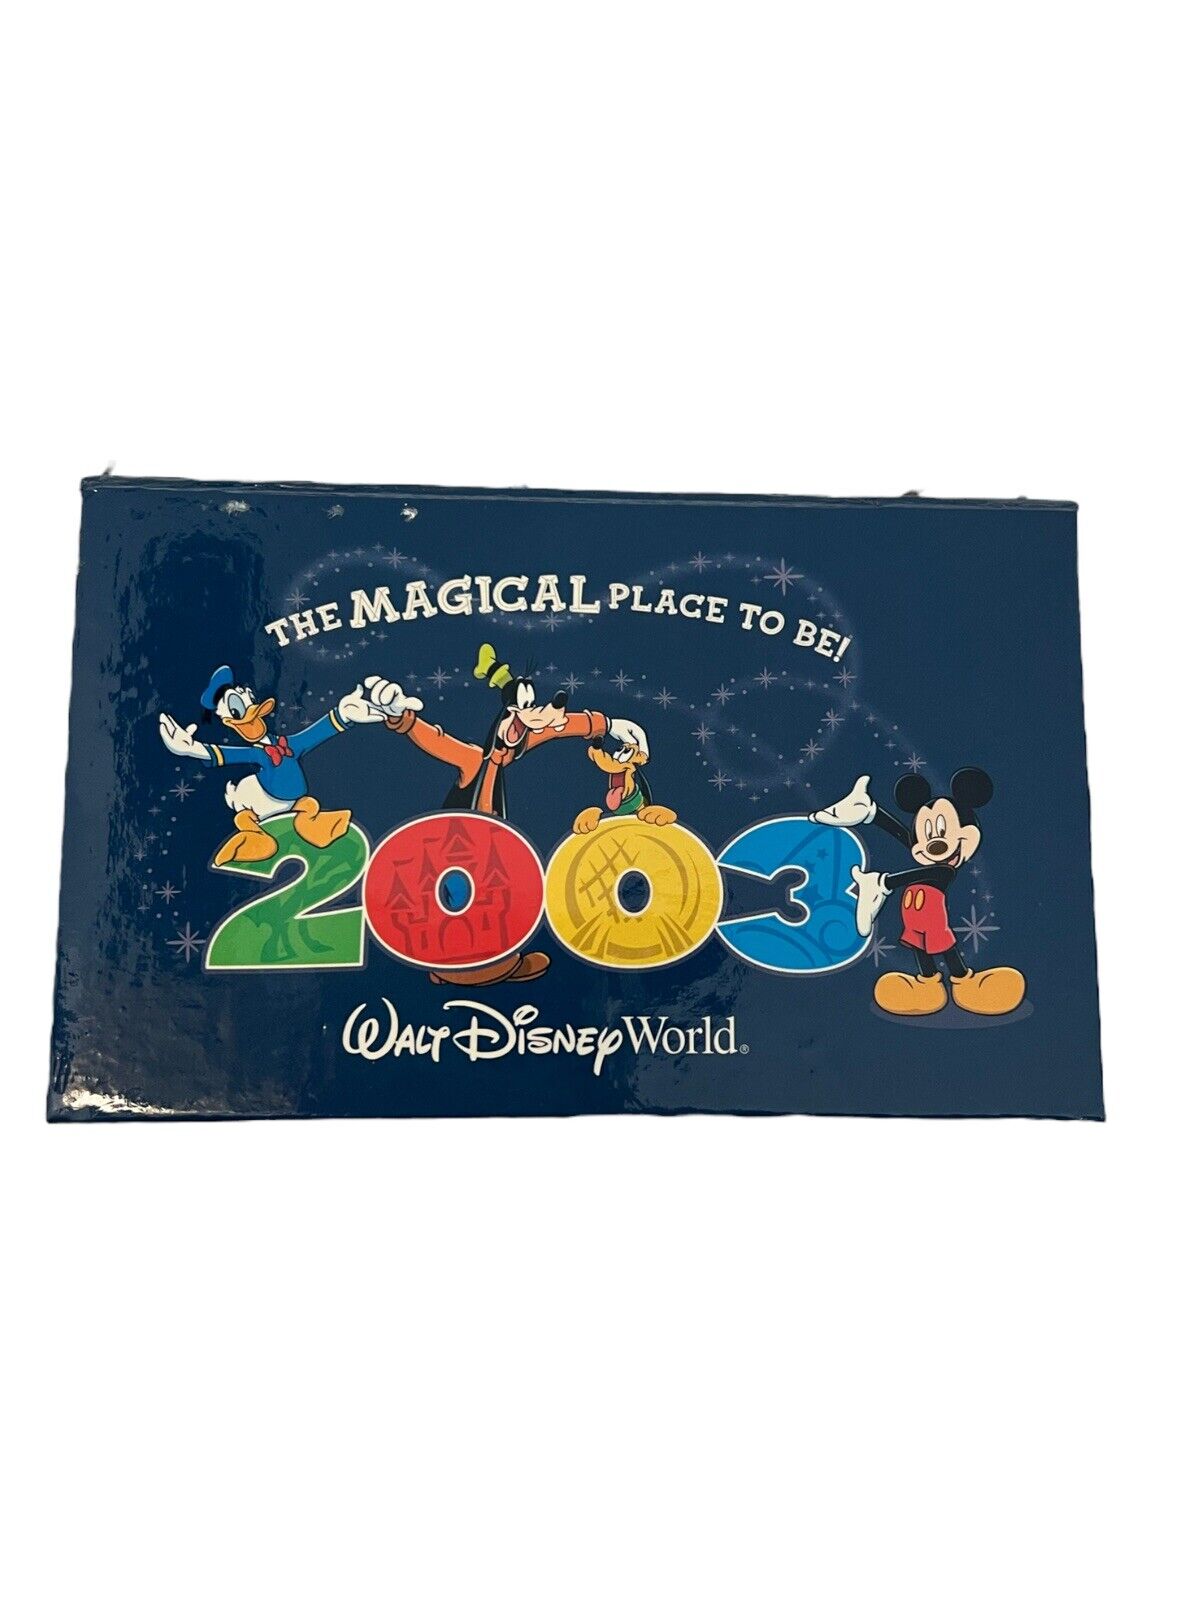 2003 Walt Disney World Boxed Pin Set